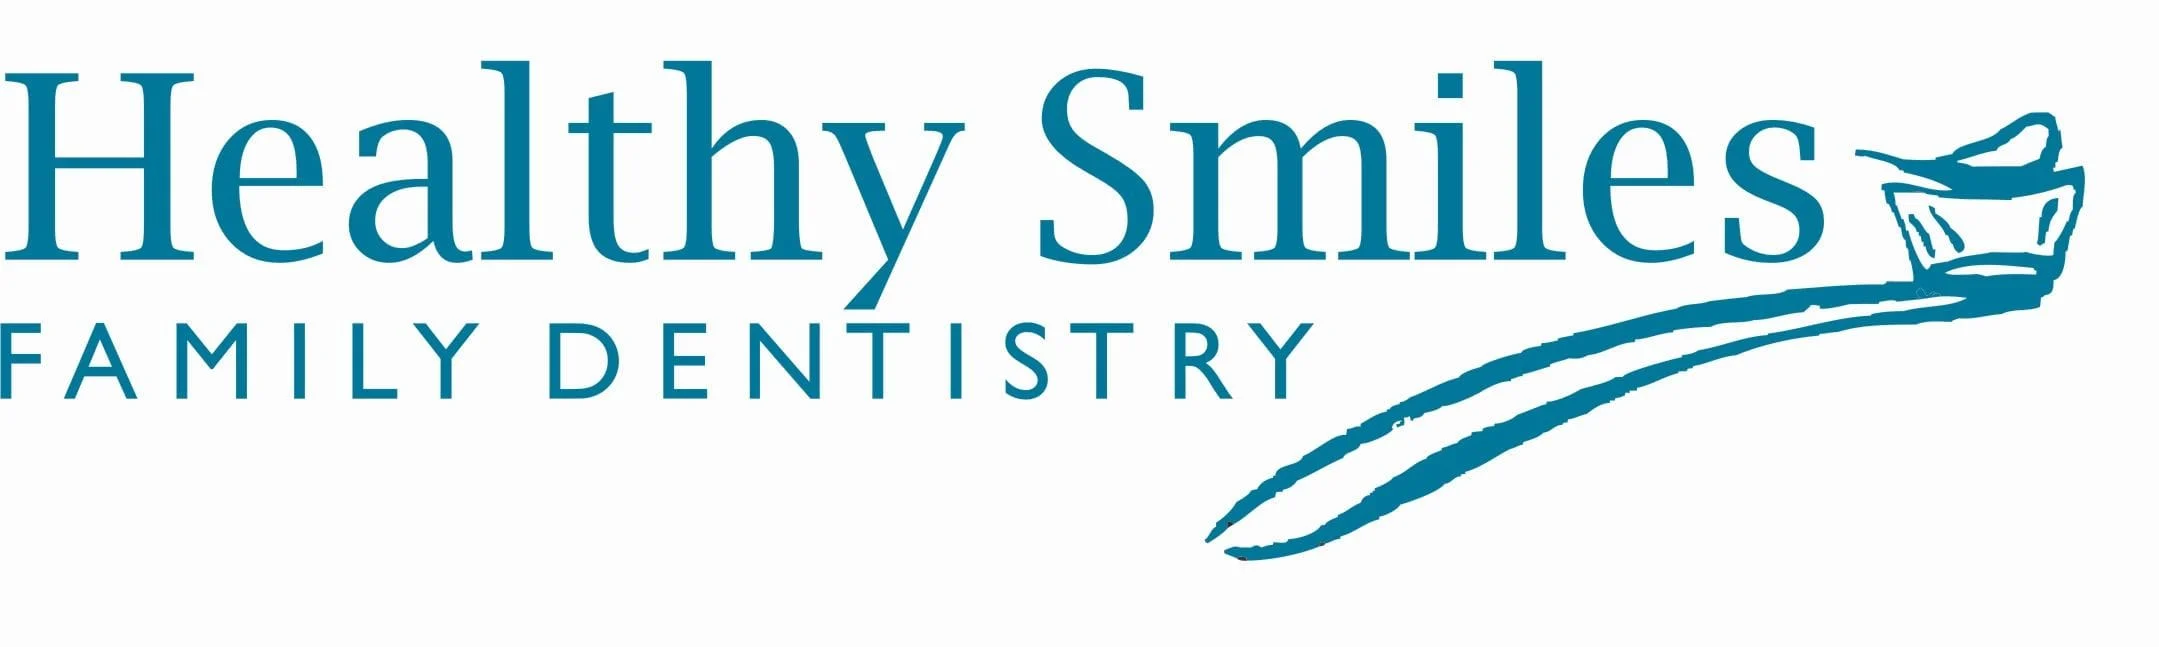 Healthy Smiles Family Dentistry | Claremore, OK | Tulsa, OK